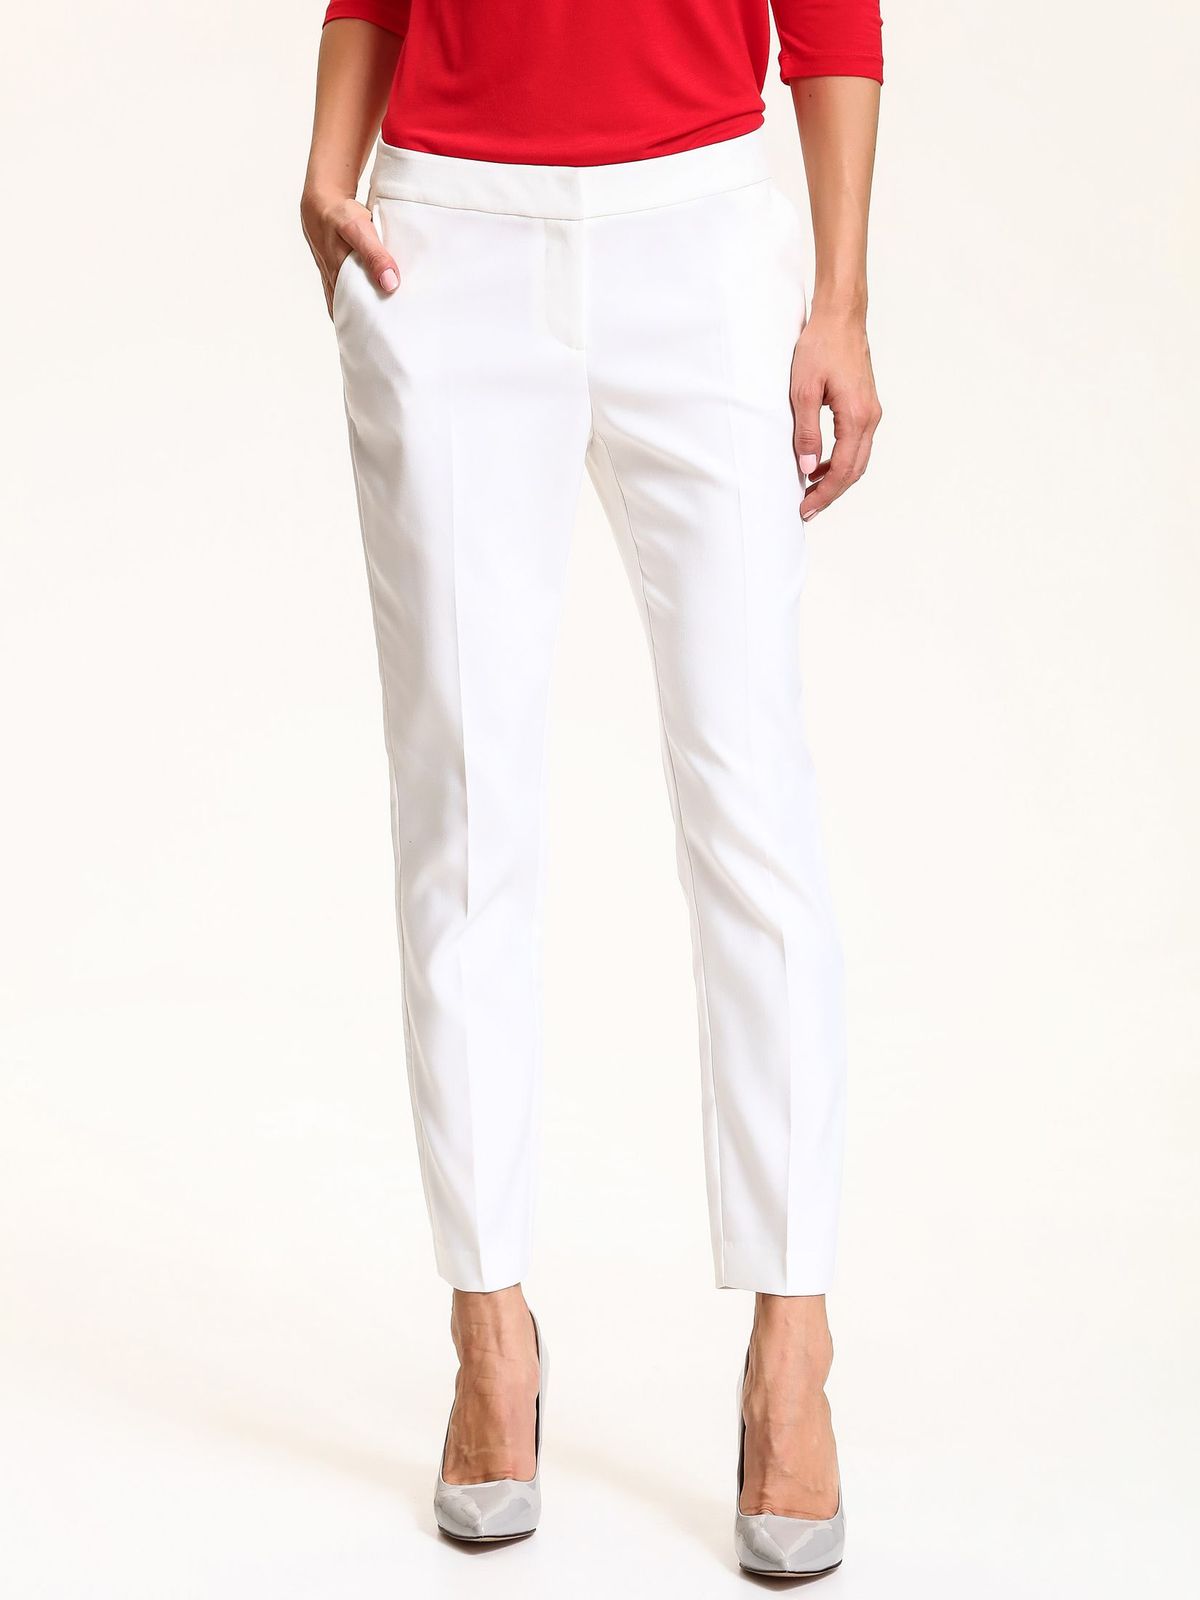 Валберис белые брюки. Белые брюки женские. Белые штаны женские. Белые летние брюки женские. Белые классические брюки женские.